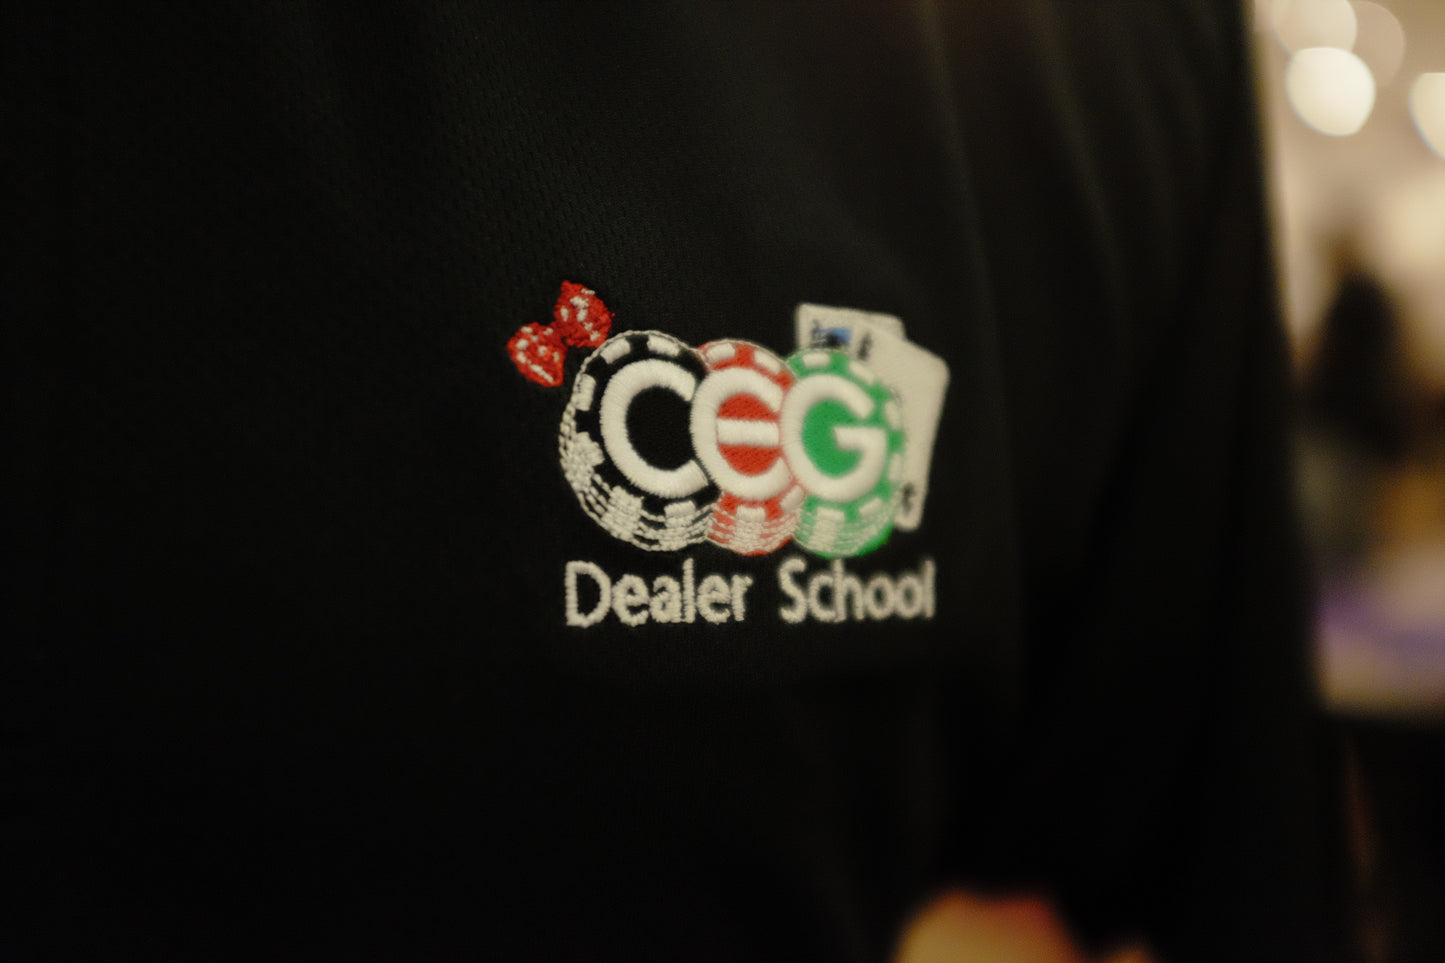 Premium CEG Dealer School Black Sport Polo